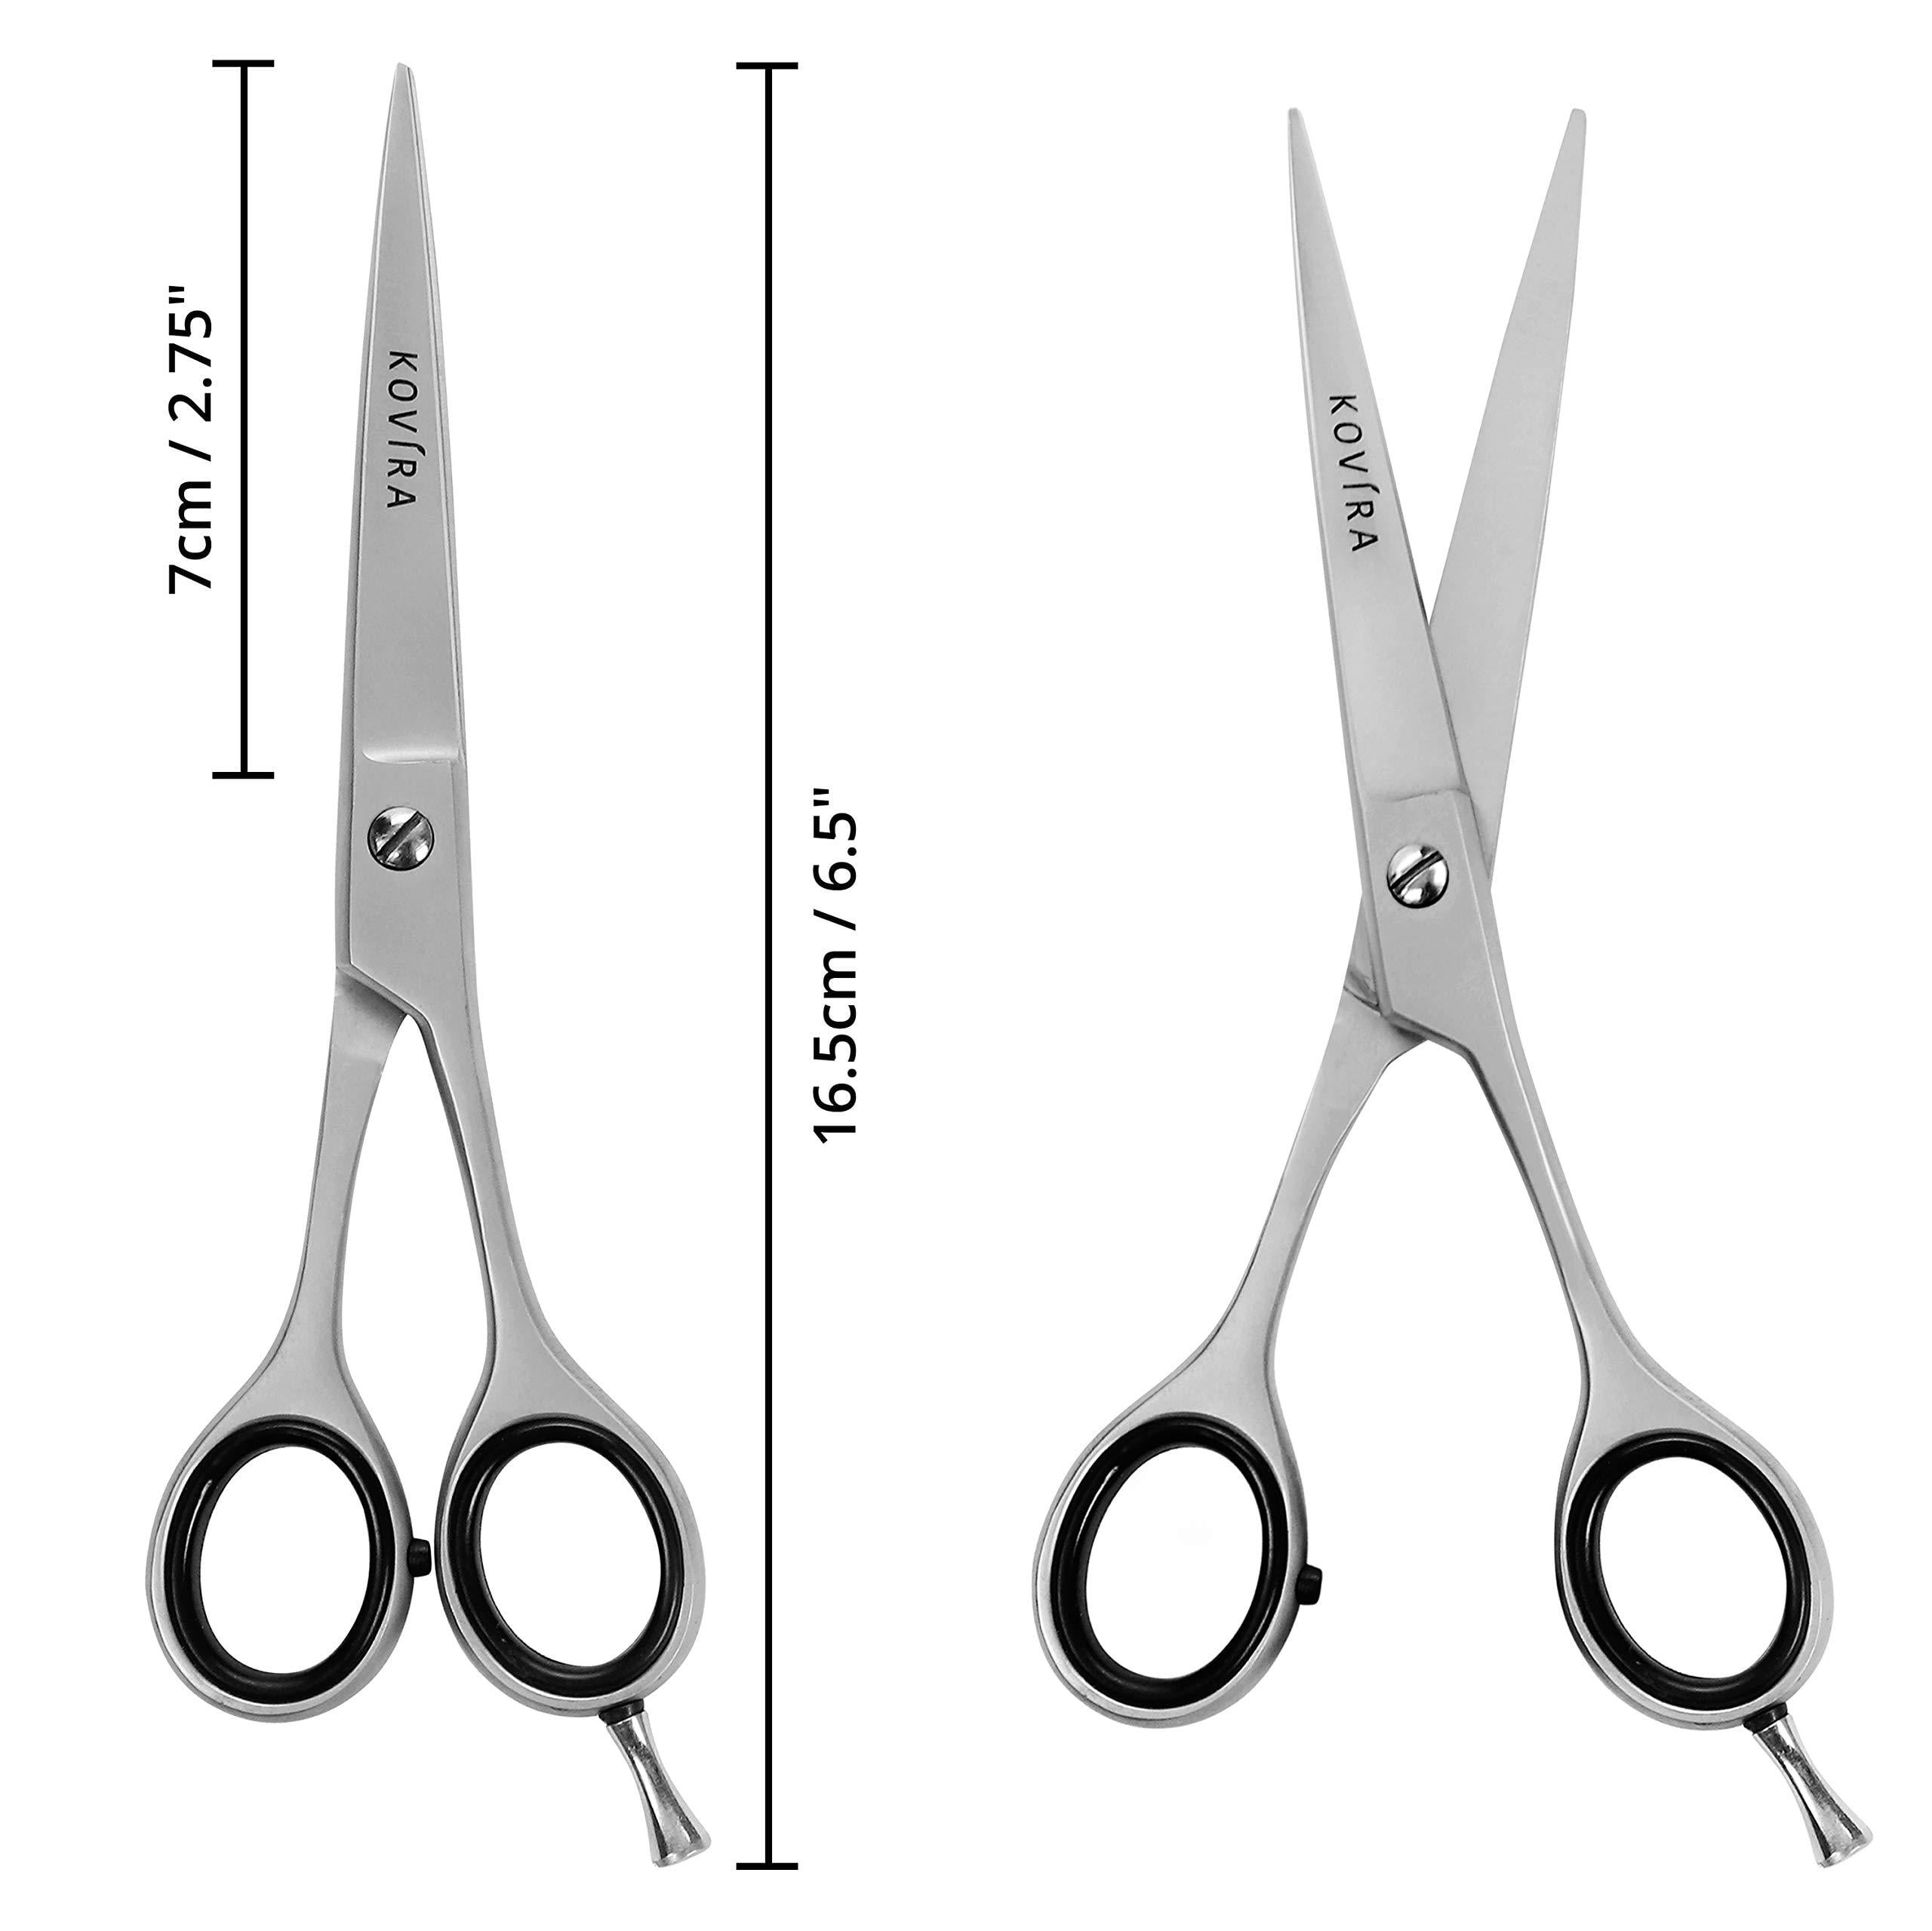 kovira hair scissors set